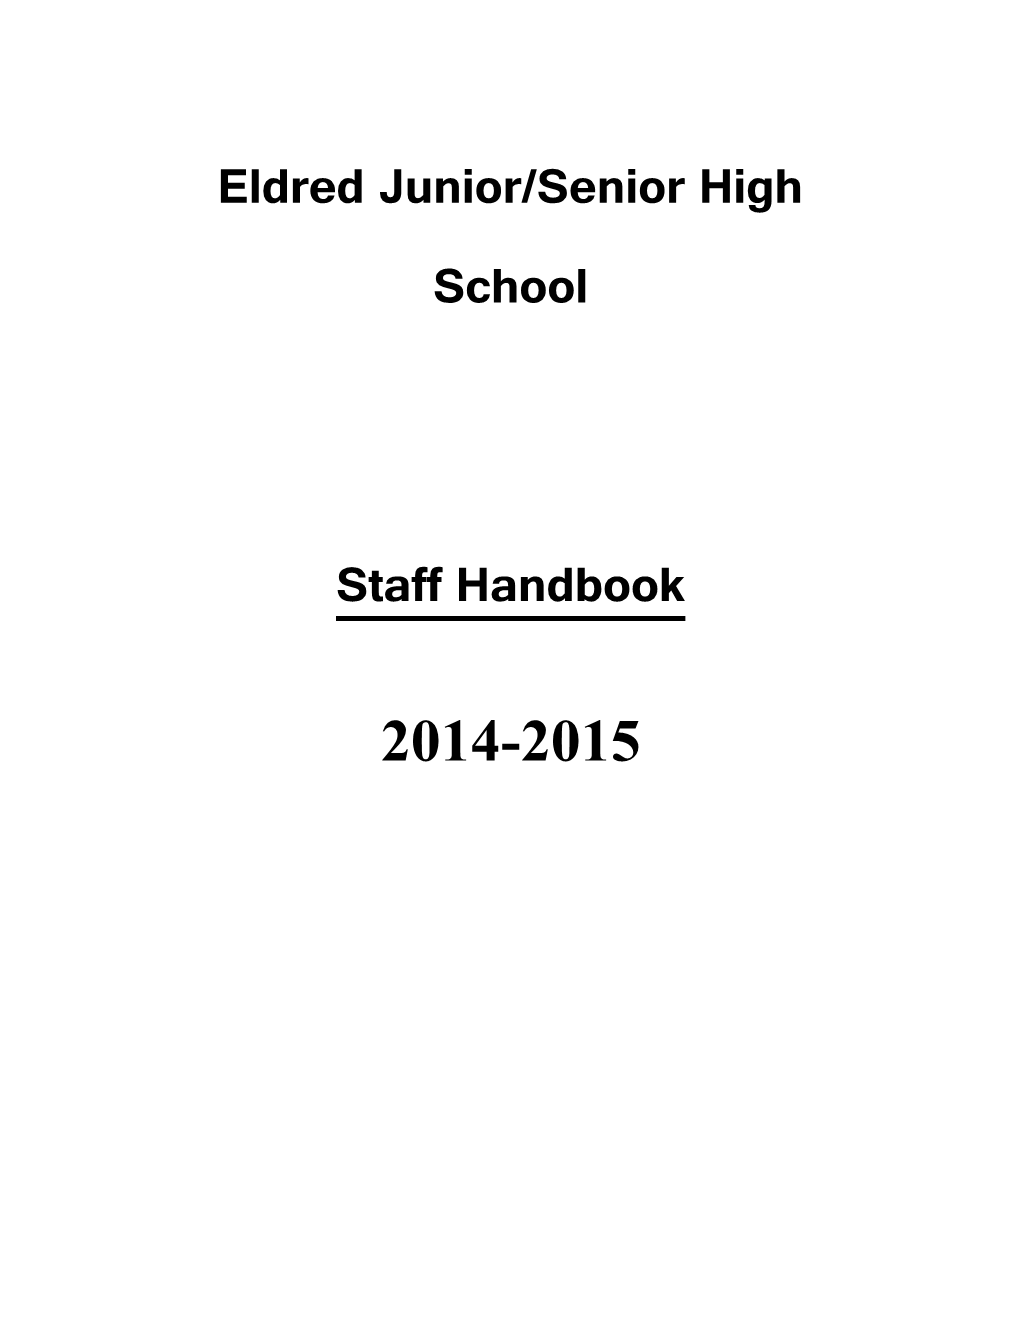 Eldred Junior/Senior High School